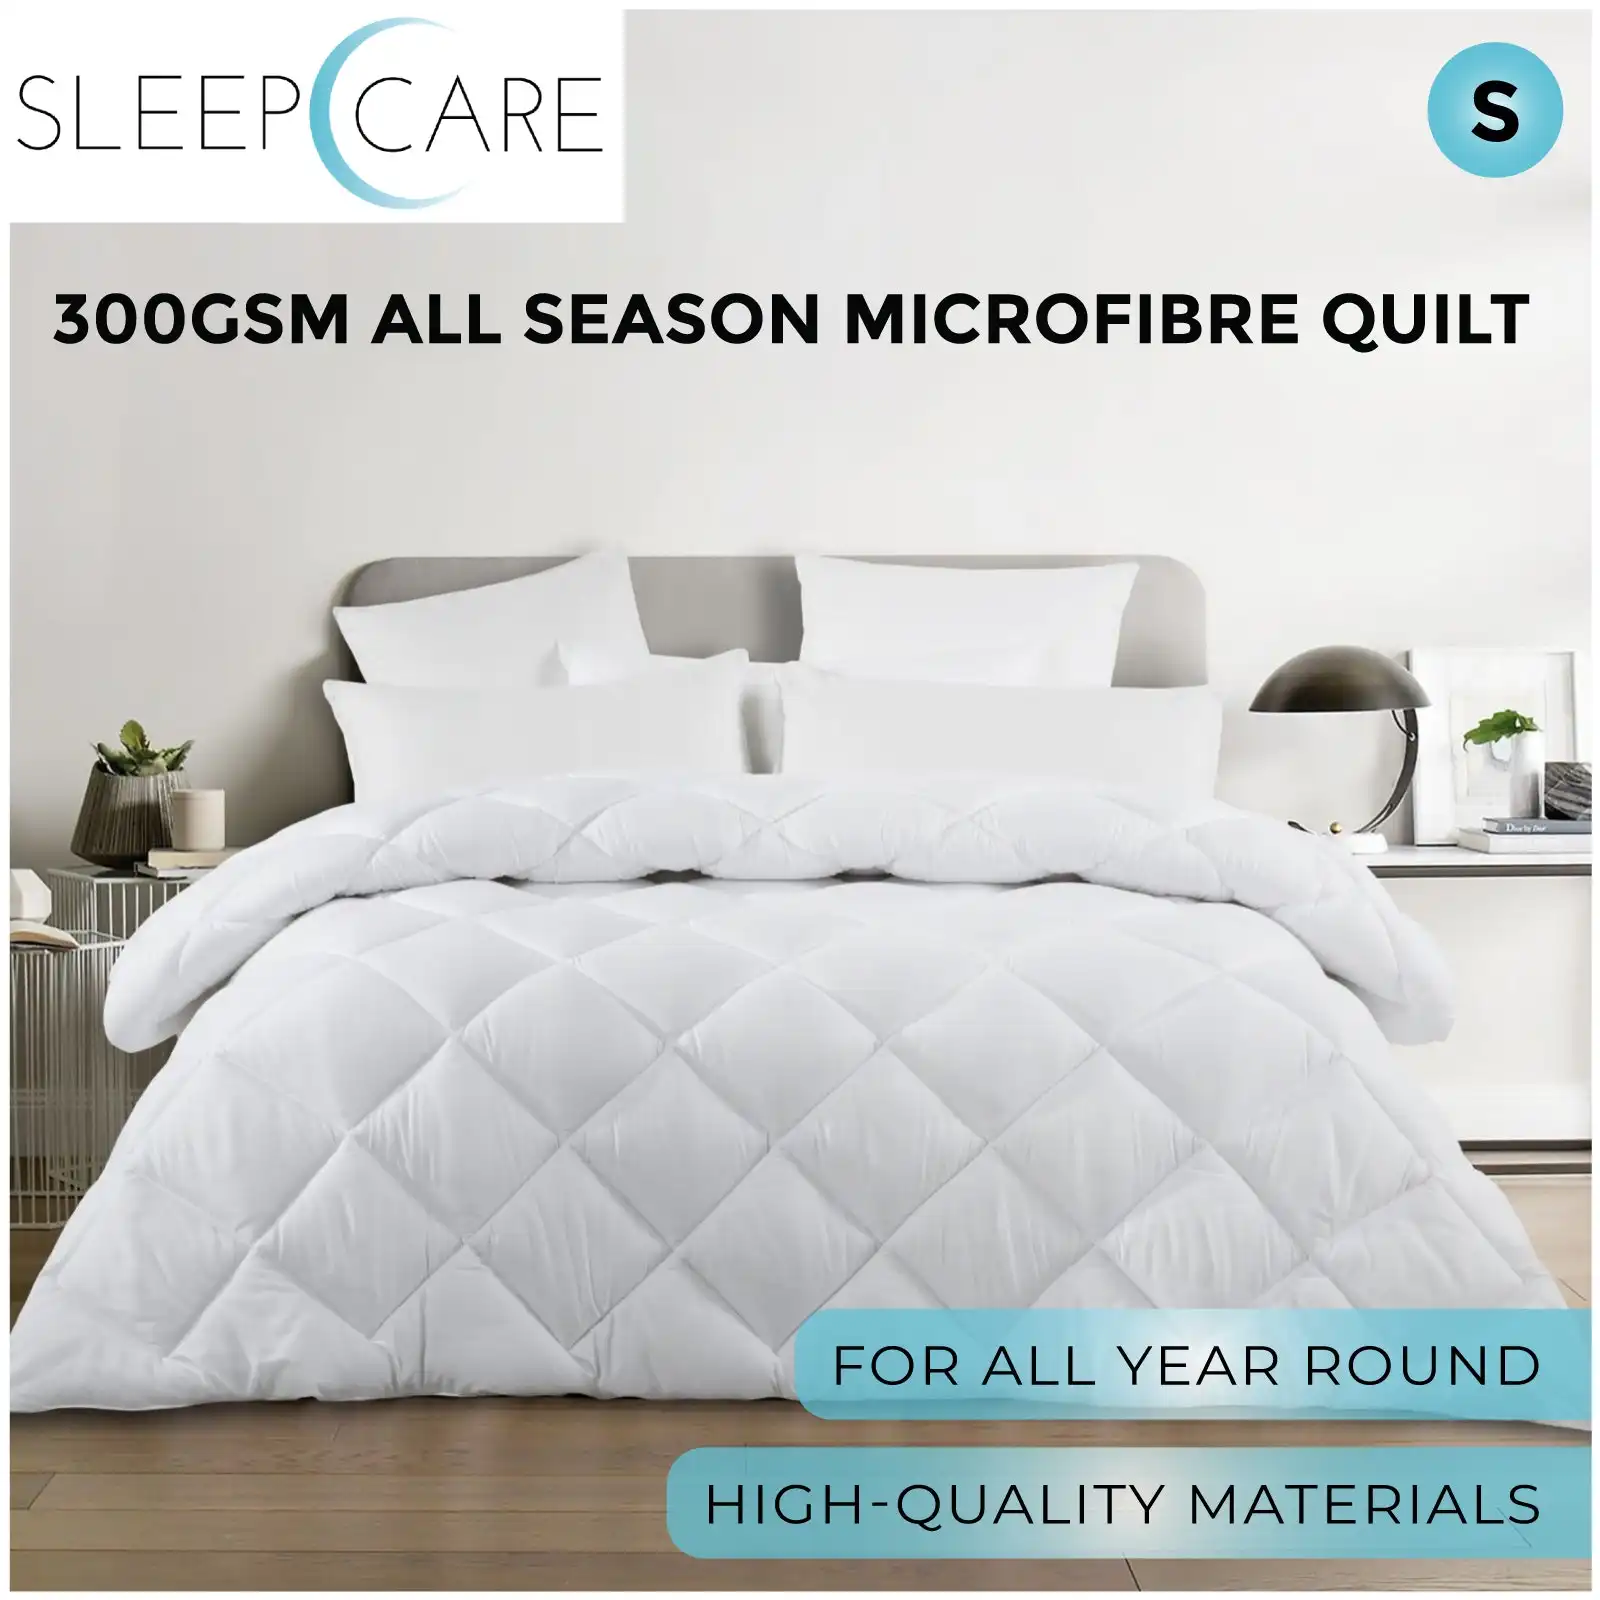 Sleepcare 300GSM All Season Microfibre Quilt Single Bed